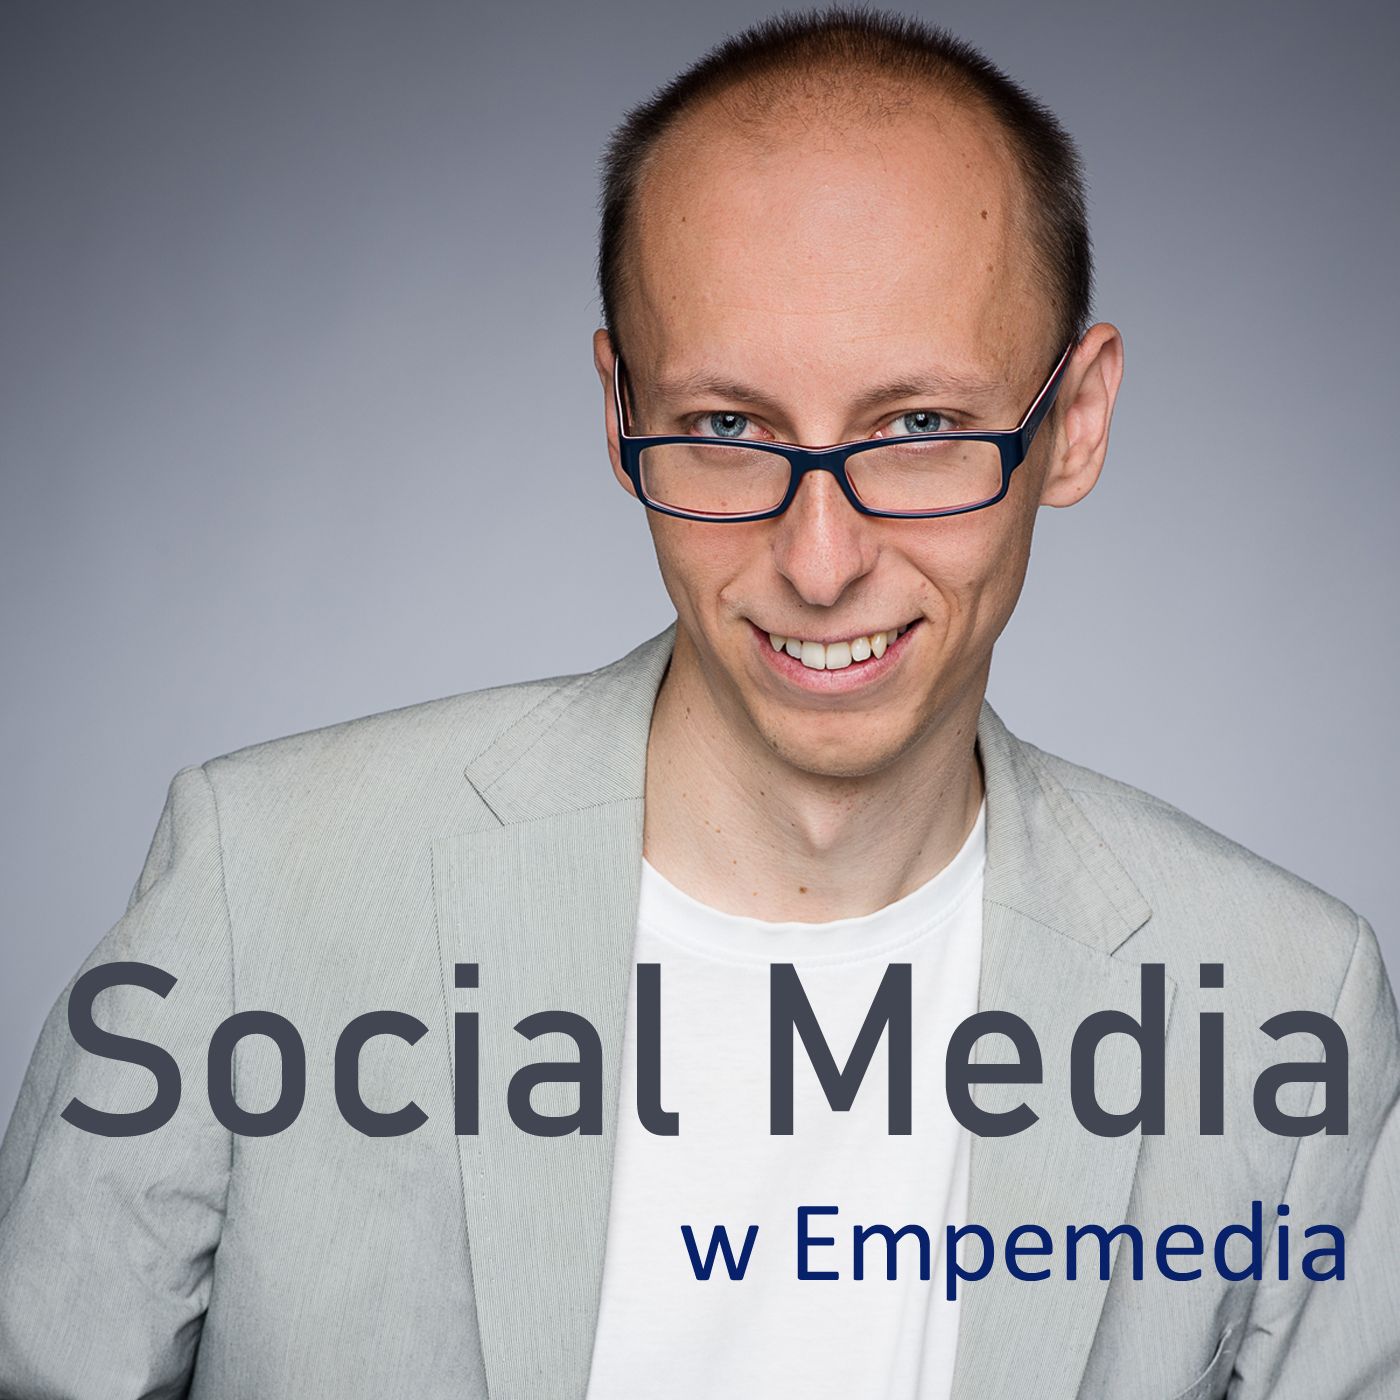 Social Media w Empemedia